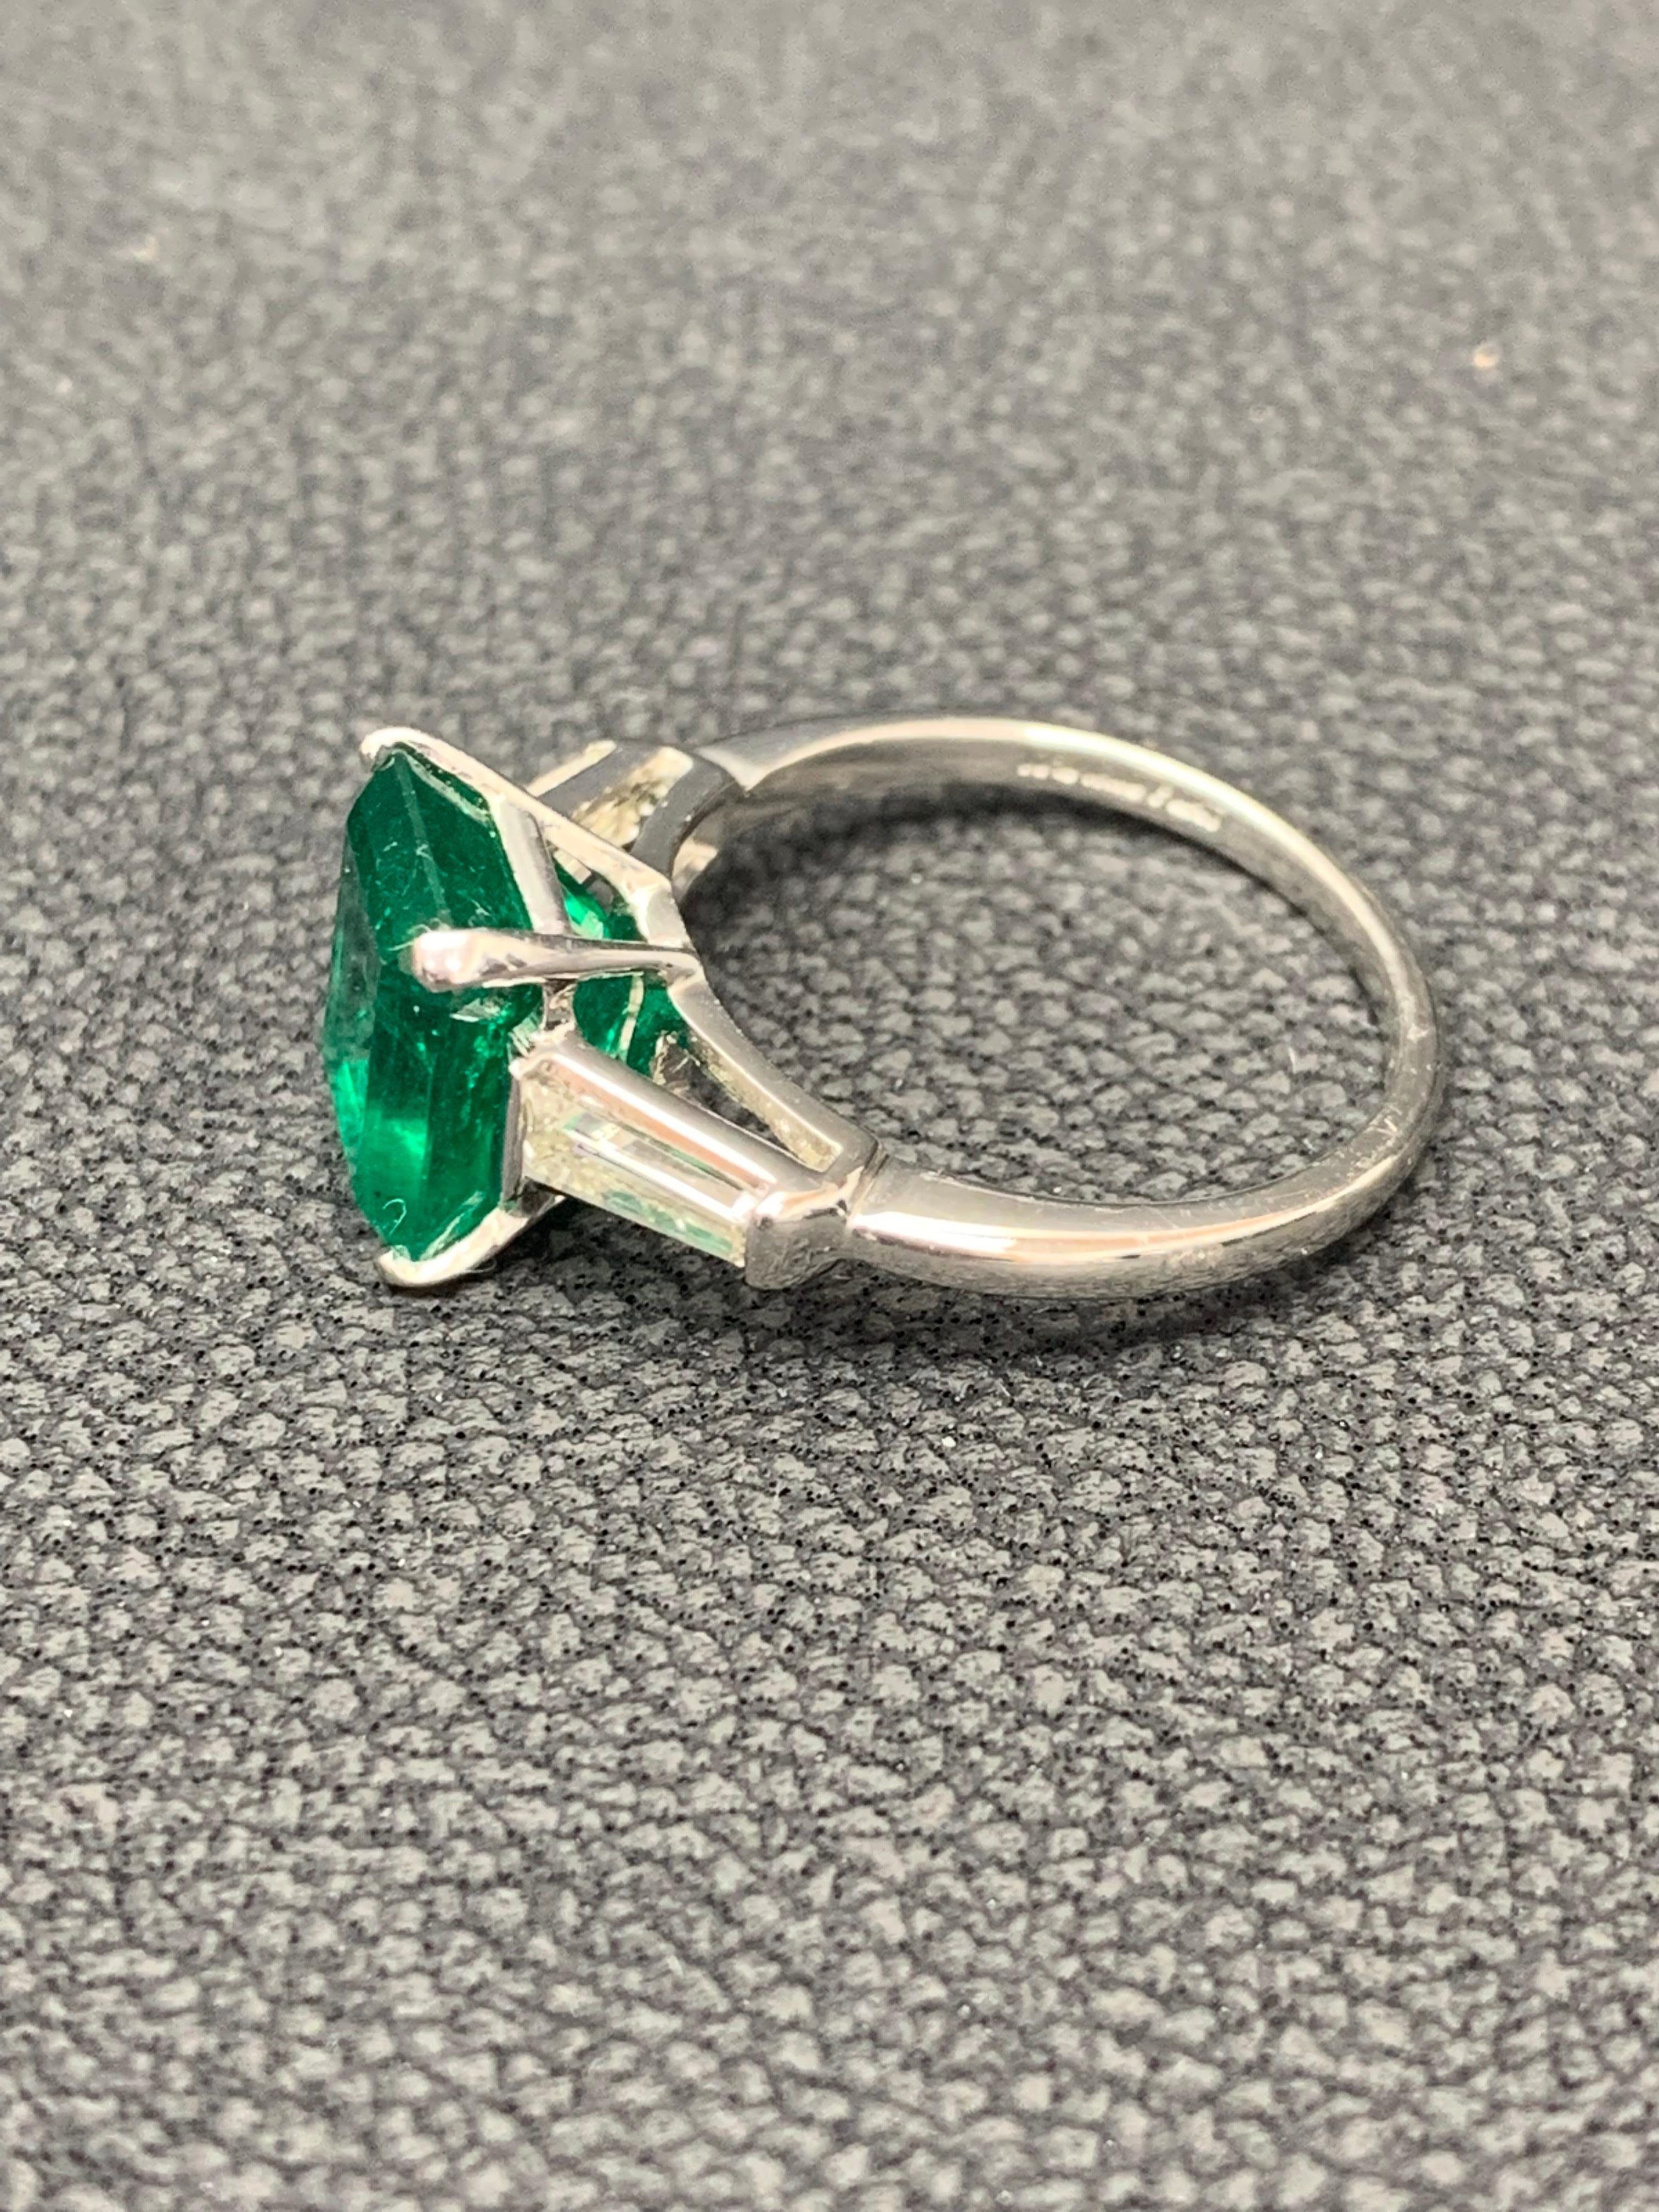 Certified 3.04 Carat Emerald Cut Columbian Emerald Diamond Ring For Sale 2